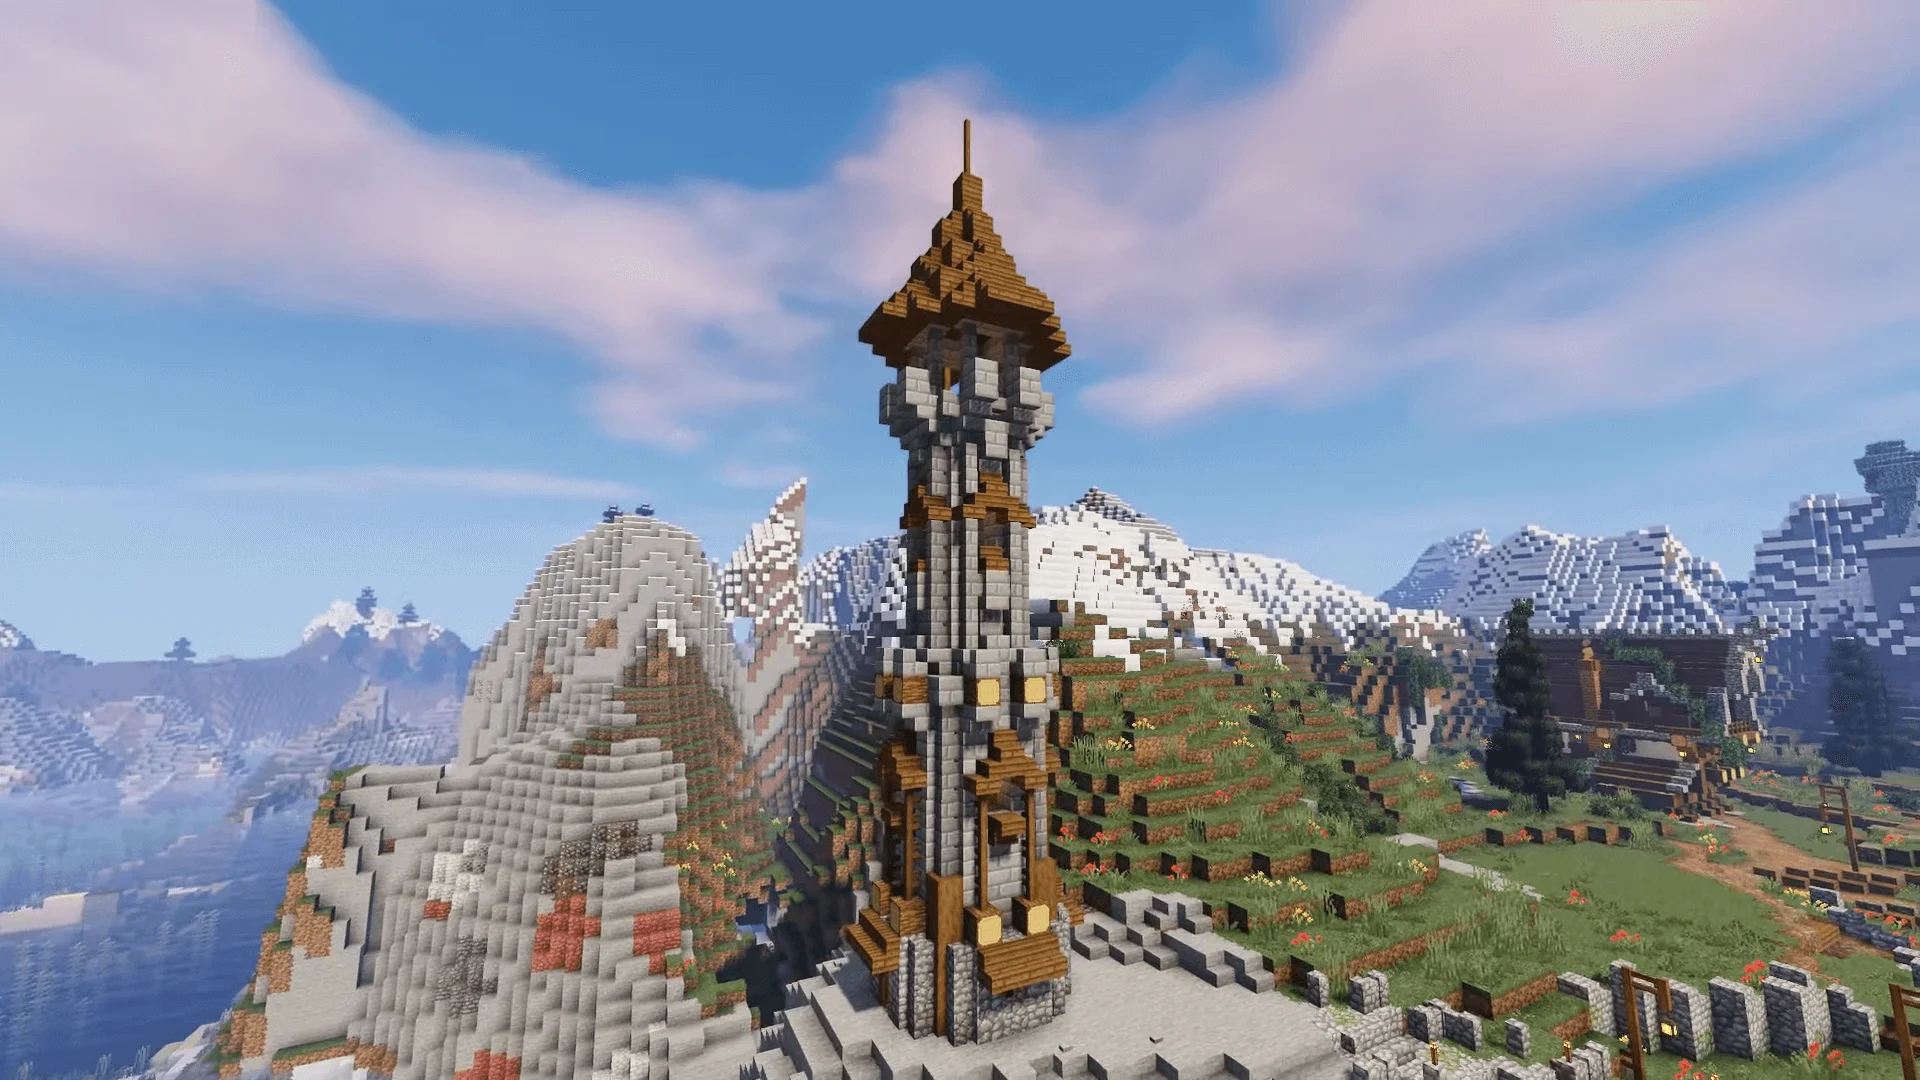 minecraft castle tower simple